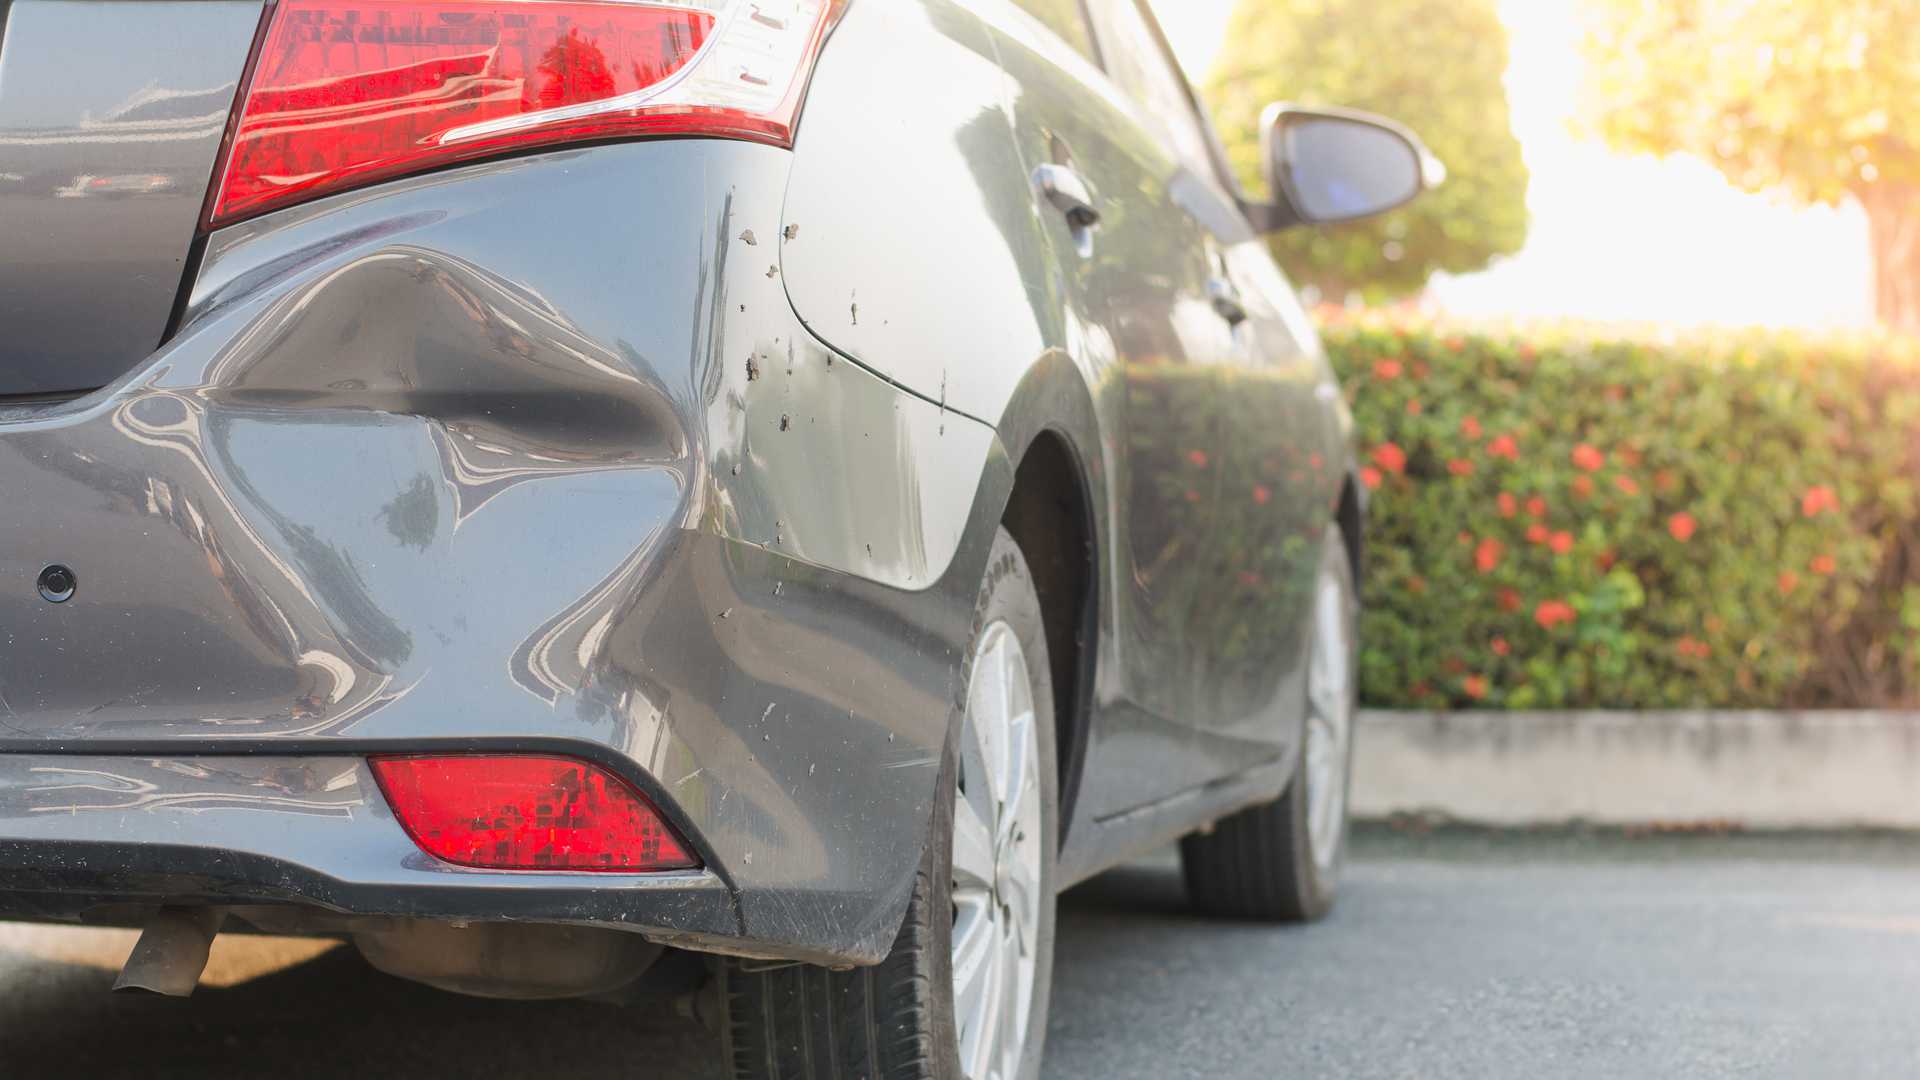 How to Fix Car Body Damage: DIY vs Hiring the Pros